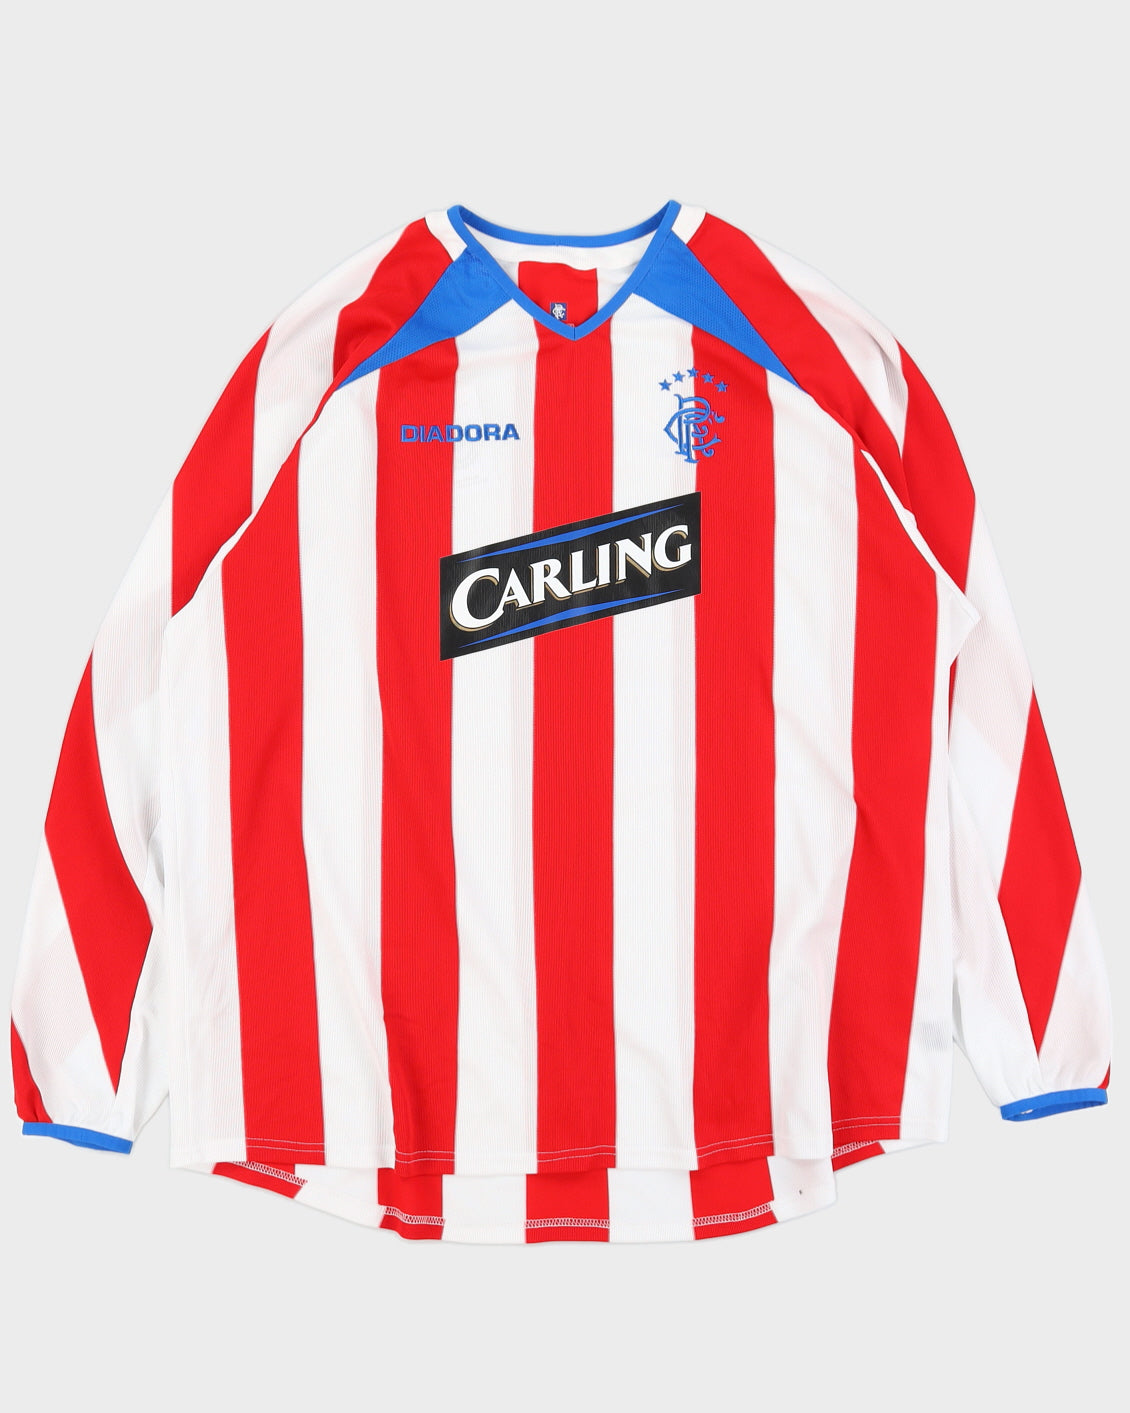 '03/04 Diadora Glasgow Rangers Football Shirt - XXL